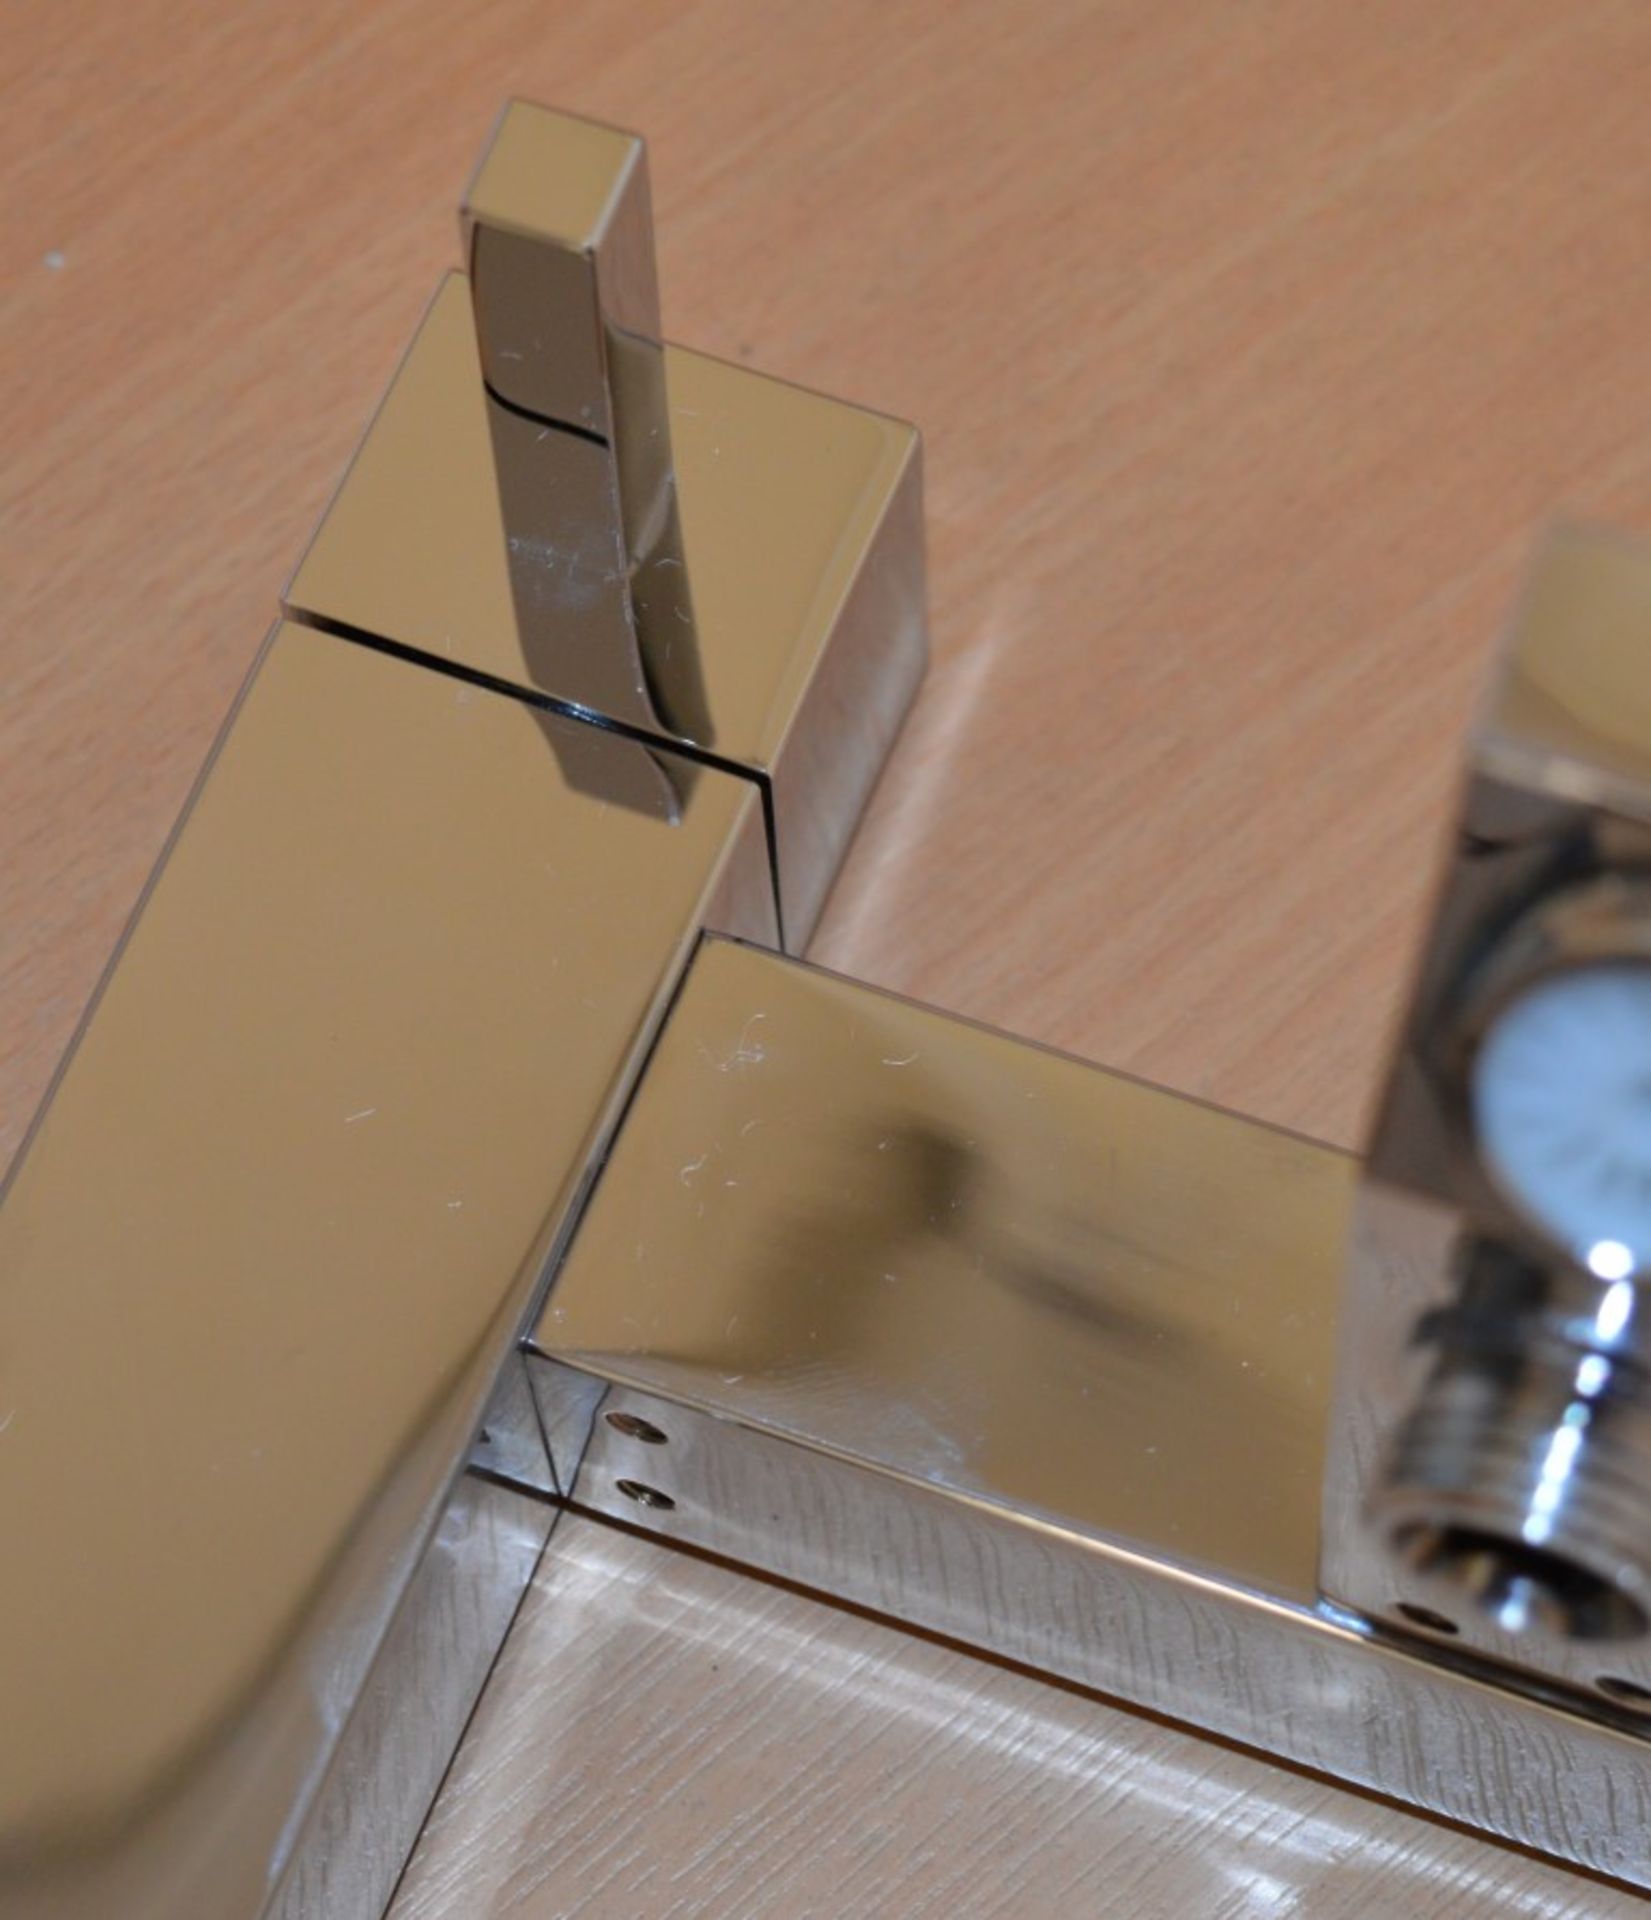 1 x Verona Deck Bath Shower Mixer Tap - Vogue Bathrooms - Modern Bath Mixer Tap in Bright Chrome - Image 8 of 14